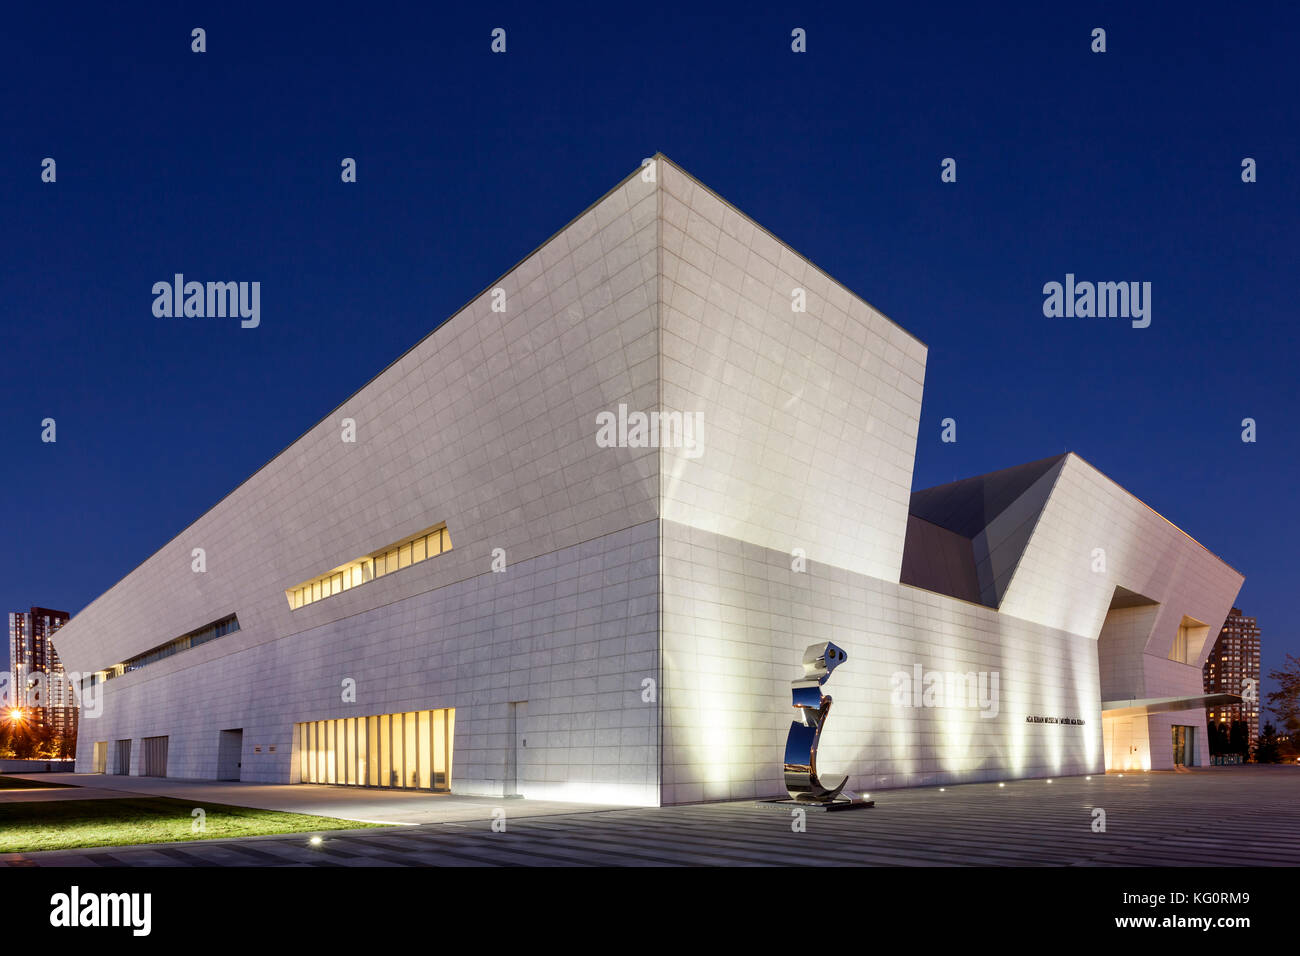 Toronto, Canada - Oct 19, 2017: Exterior view of the Aga Khan Museum at night. Toronto, Canada Stock Photo